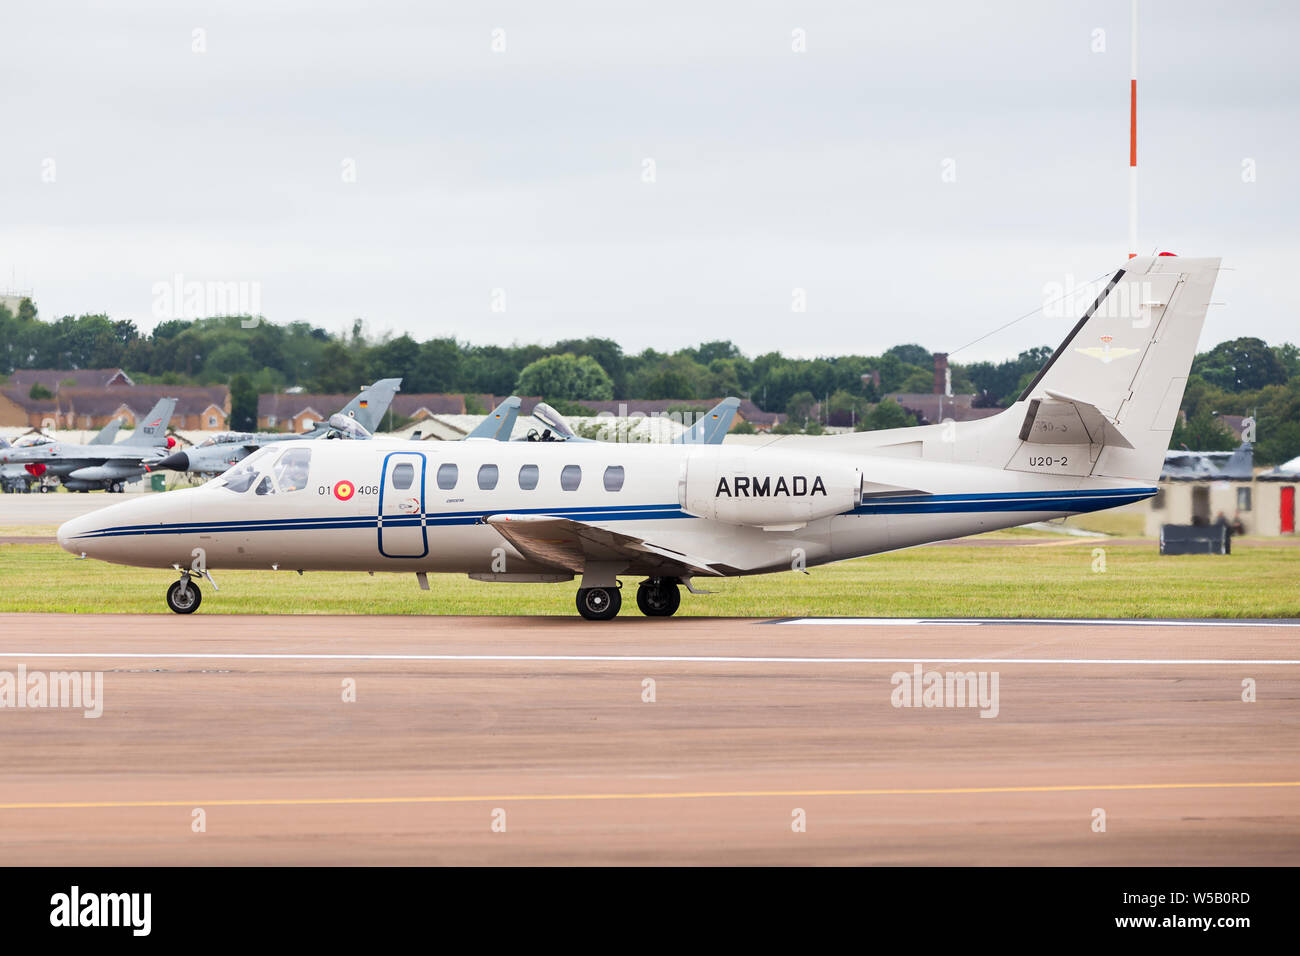 Spanish Navy Cessna Citatio captured at the 2019 Royal International Air Tattoo at RAF Fairford. Stock Photo